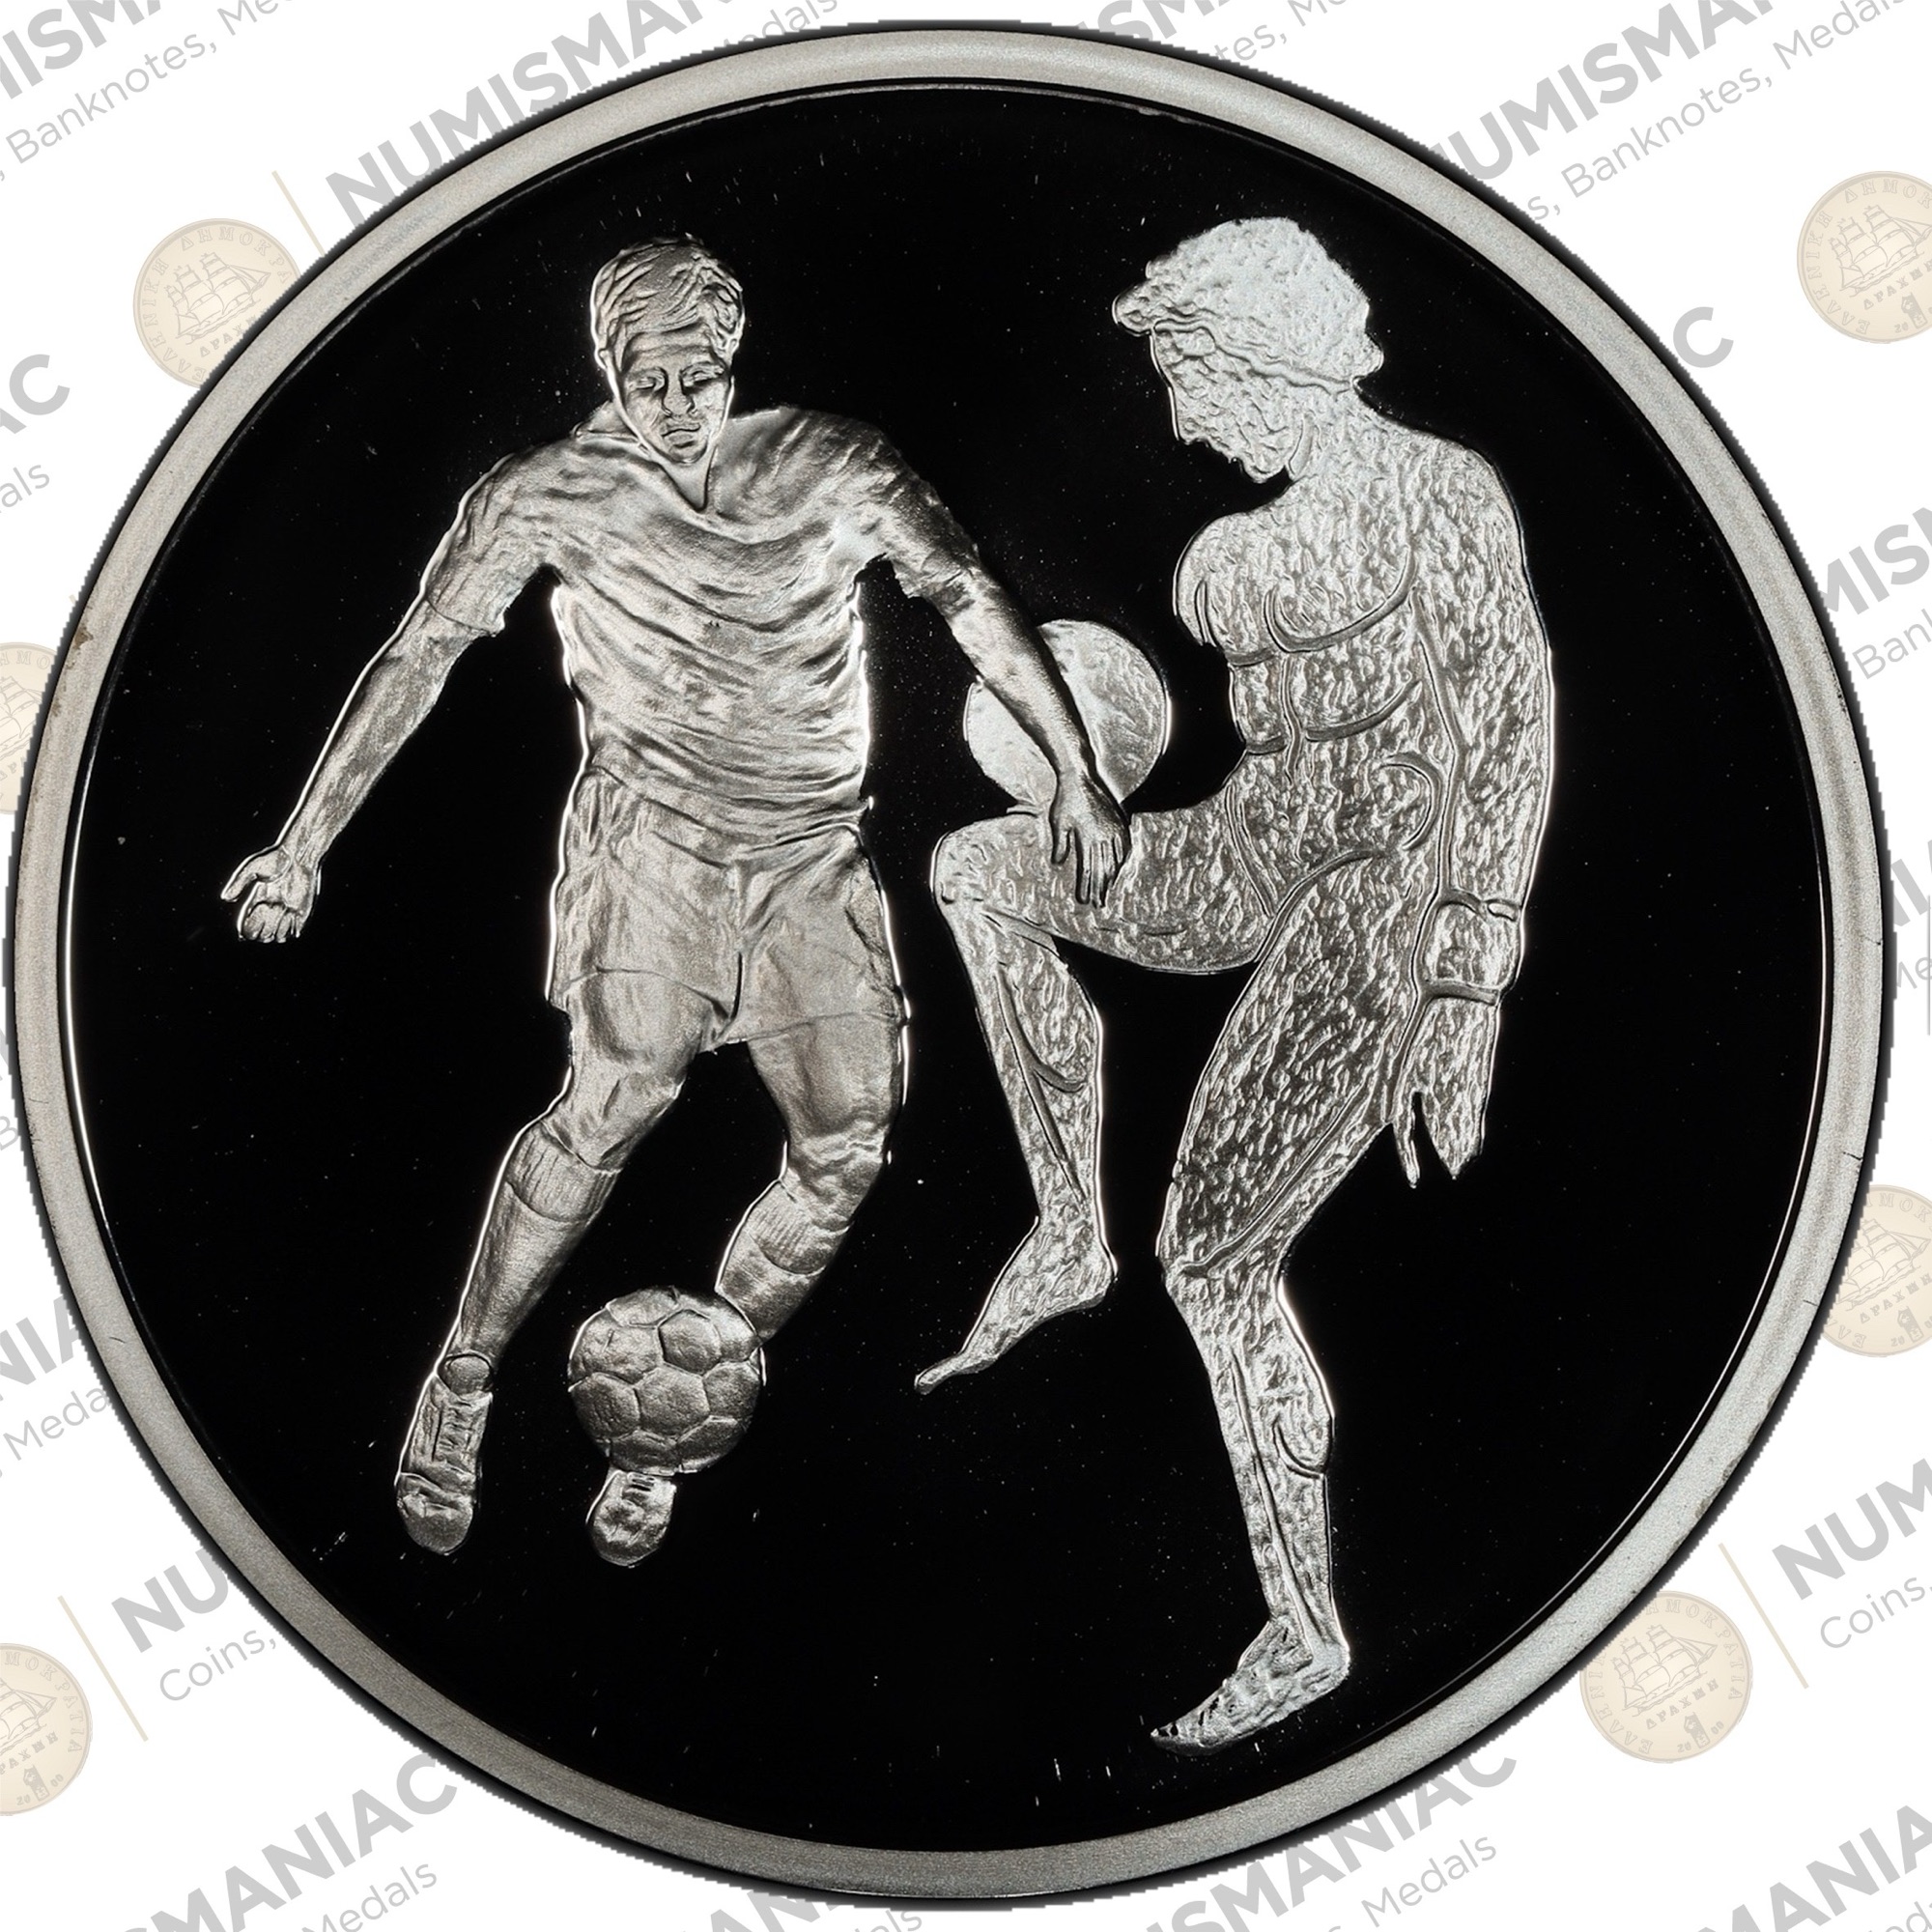 Greece 🇬🇷 10 Euro 2003 "Football" 1oz Silver Bullion Proof Coin with capsule. A